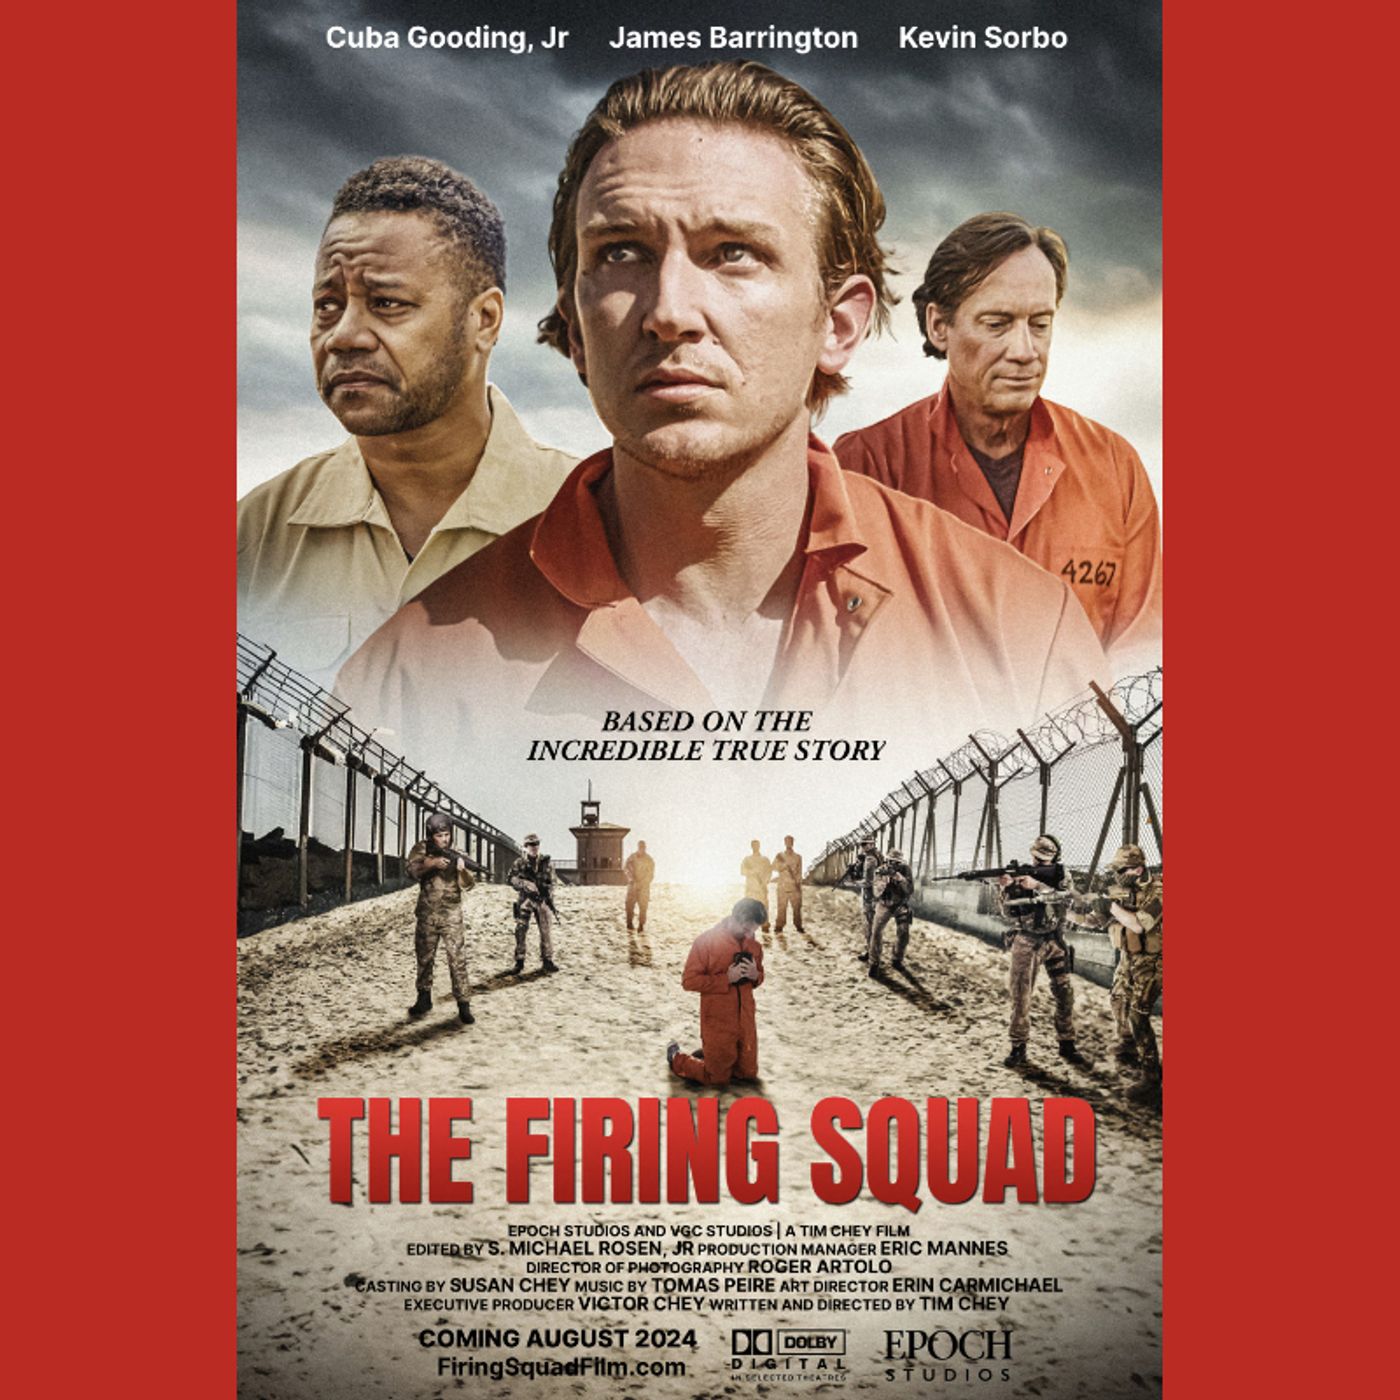 Cuba Gooding, Jr. Talks New Film 'The Firing Squad' in Theaters August 2024